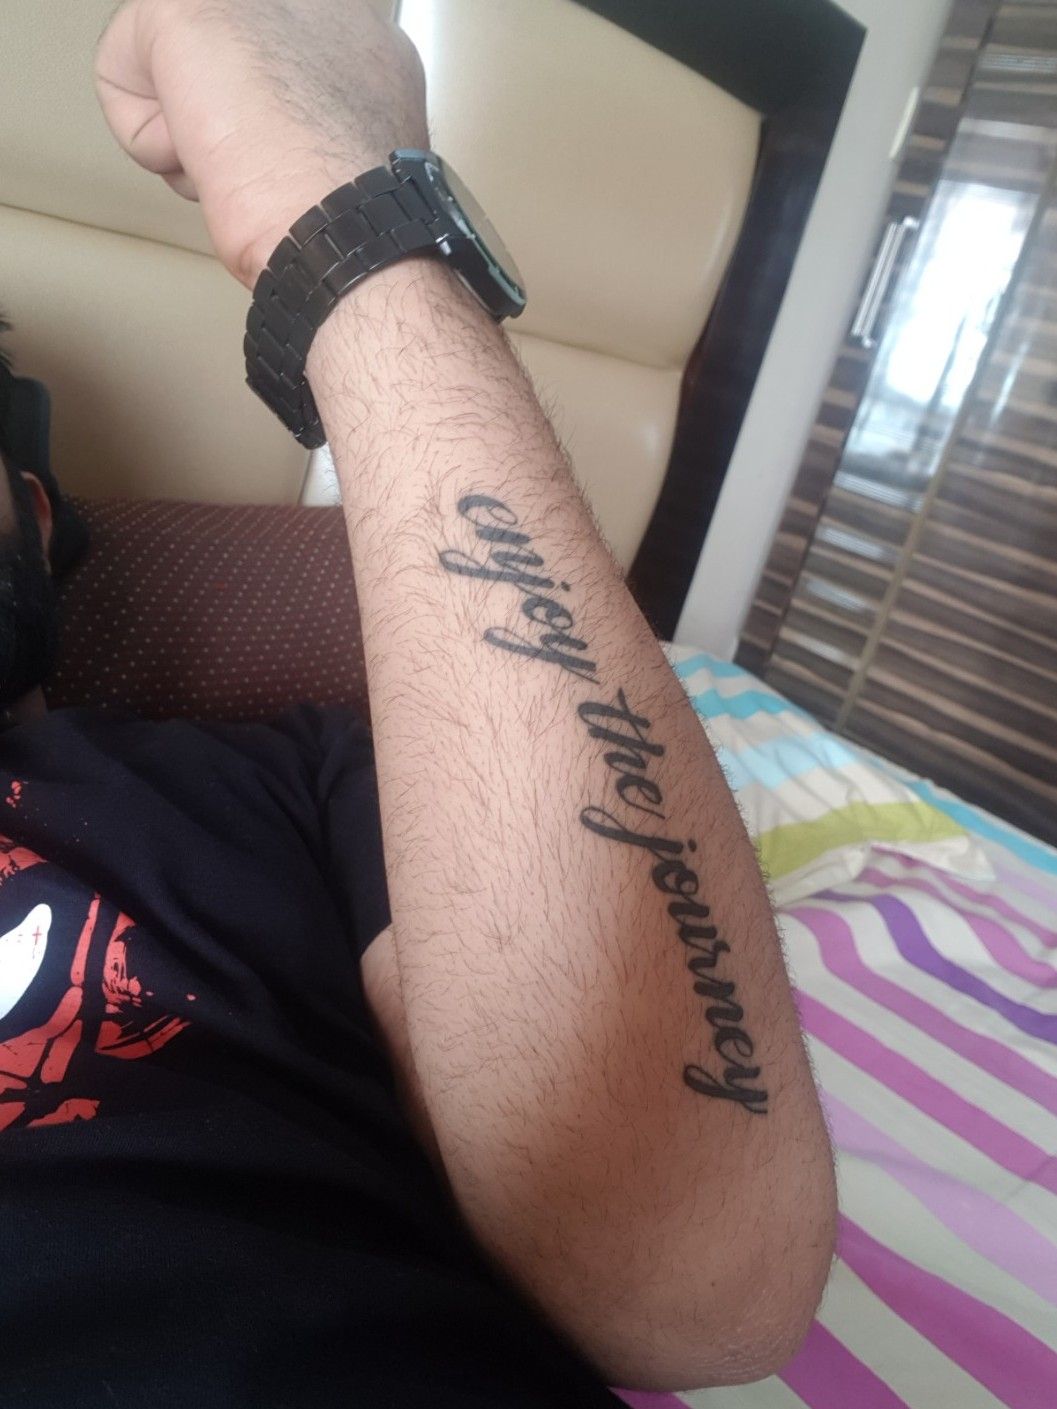 Tattoo uploaded by Jhonatan israel Mandujano • Enjoy the journey • Tattoodo